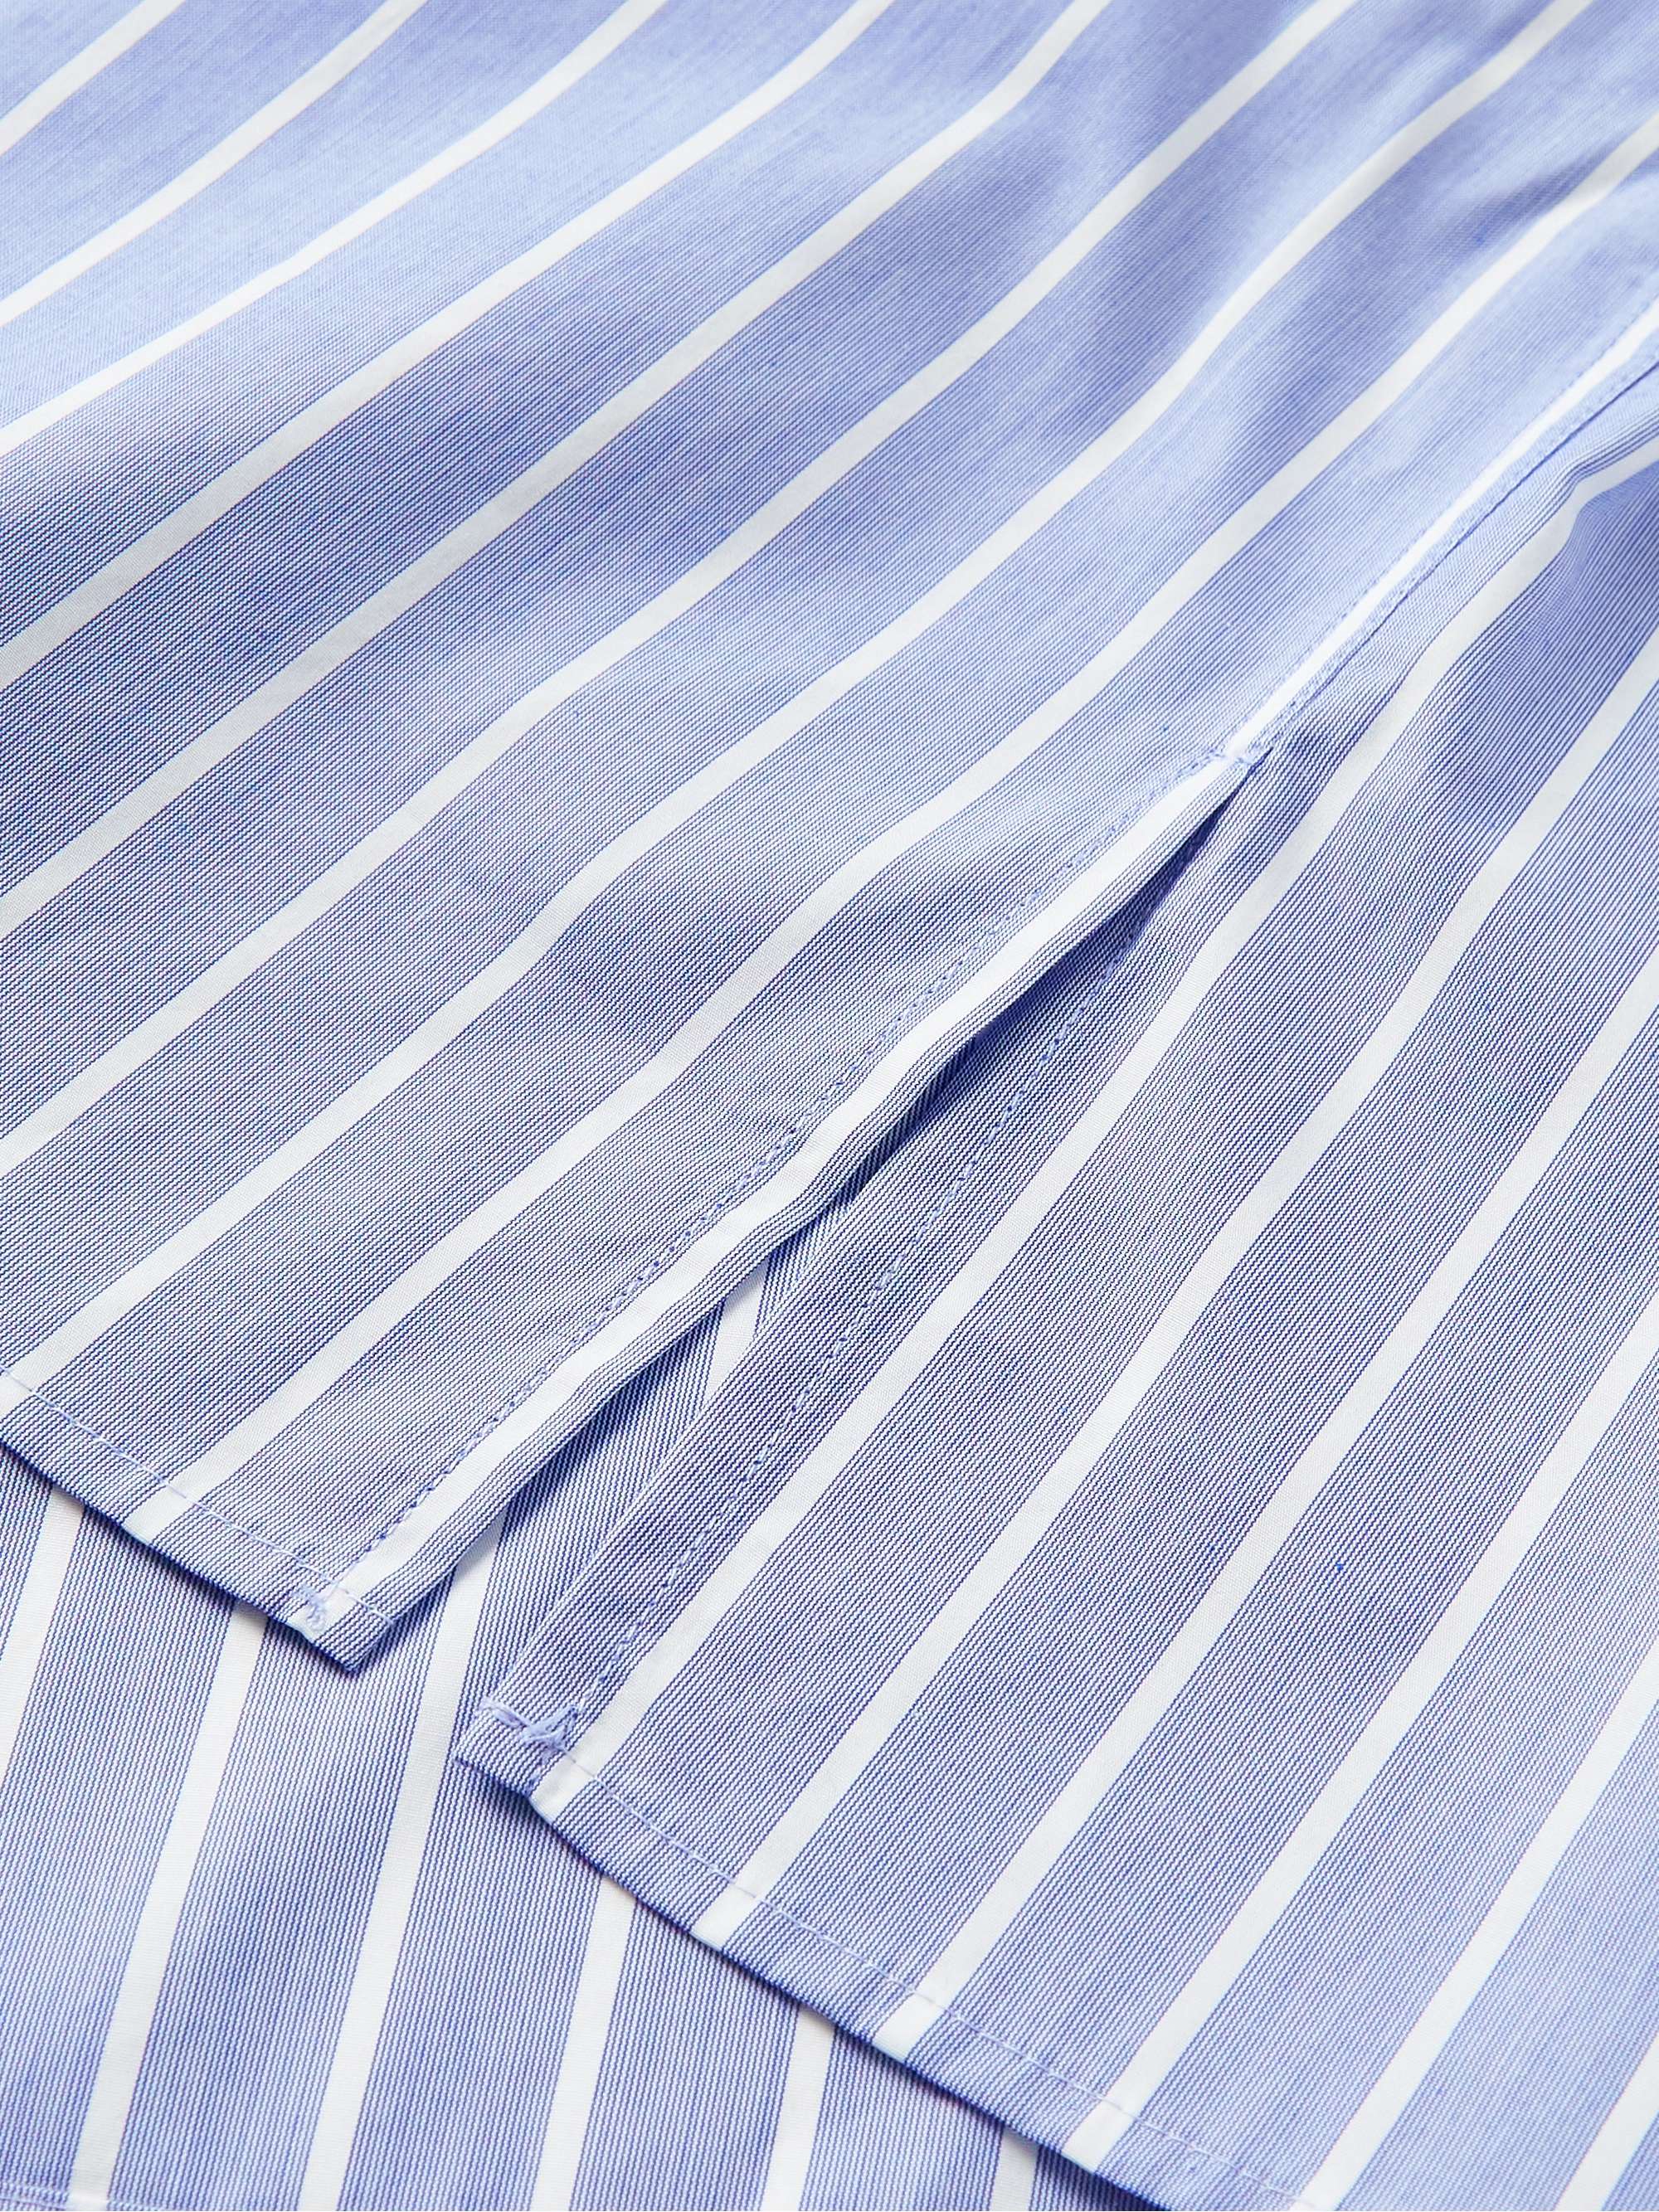 NILI LOTAN Finn Striped Cotton-Poplin Shirt